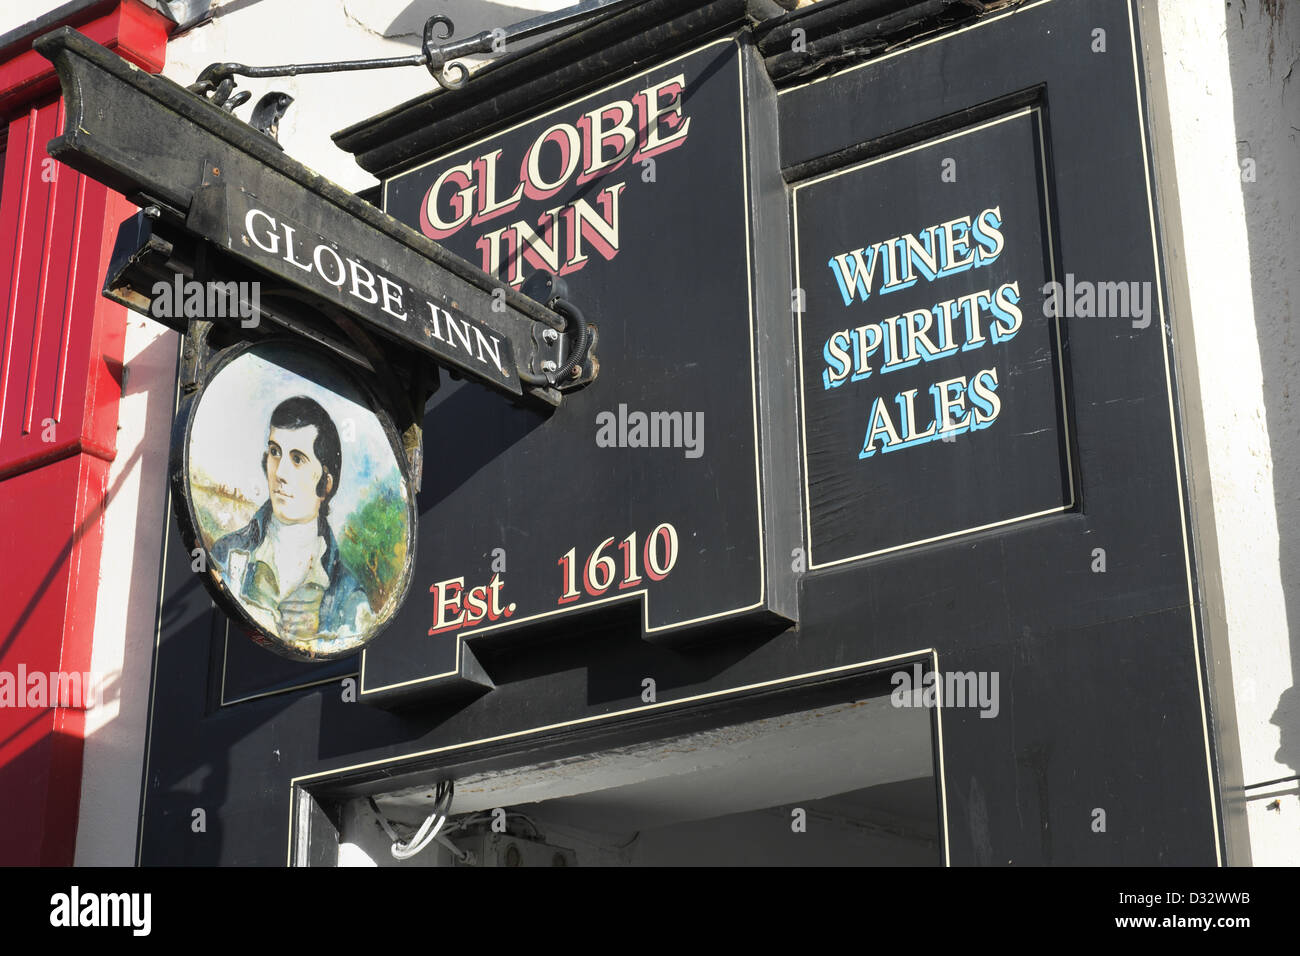 Globe Inn pub sign, Dumfries - where Robert Burns wrote many of his poems Stock Photo